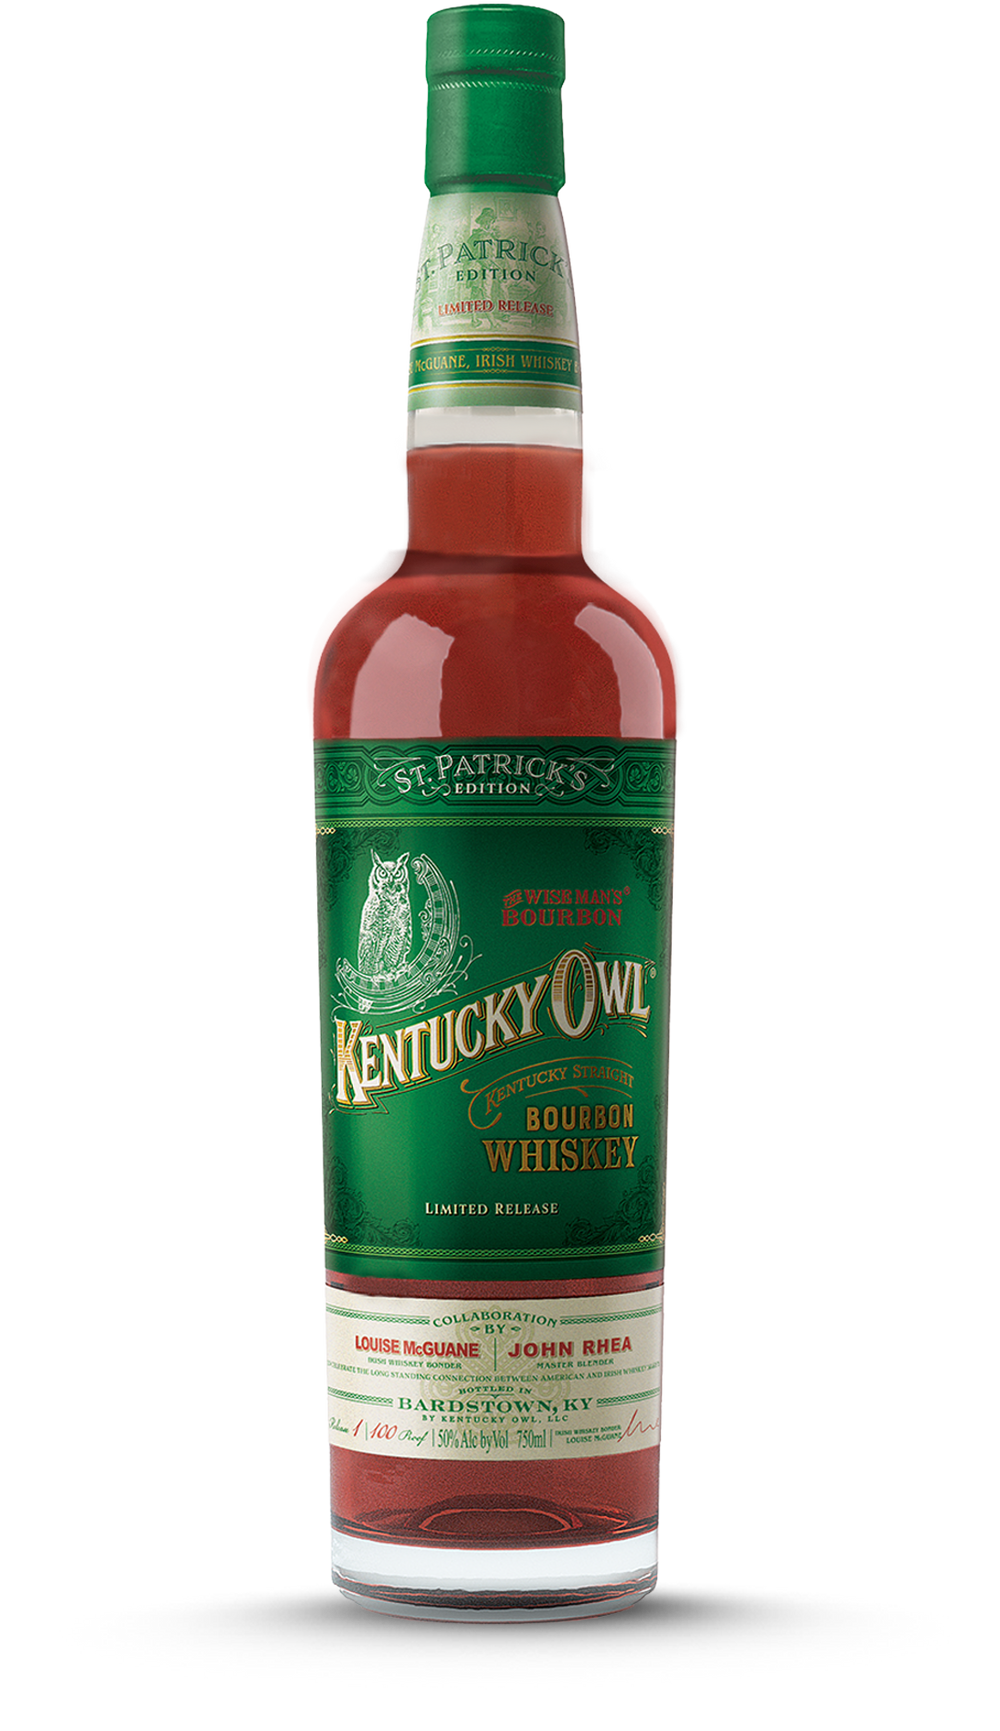 Kentucky Owl St. Patrick’s Edition Bourbon Whiskey -750ml